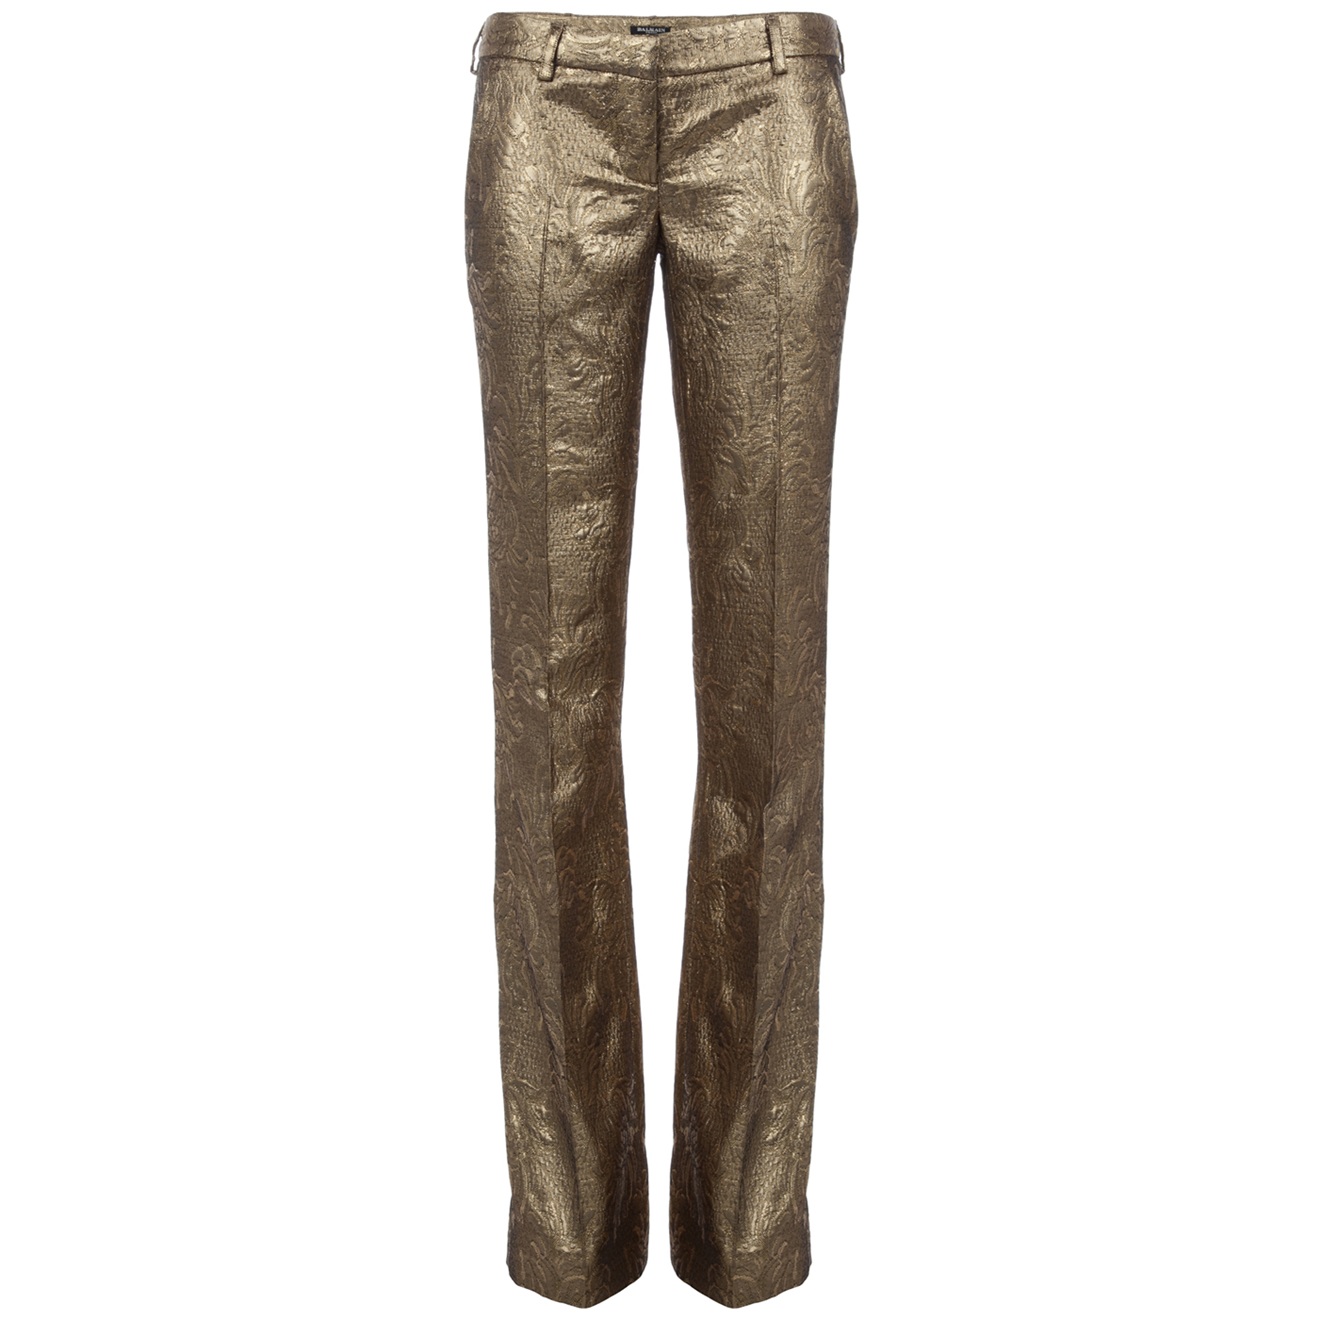 Balmain Brocade Trousers in Gold | Lyst